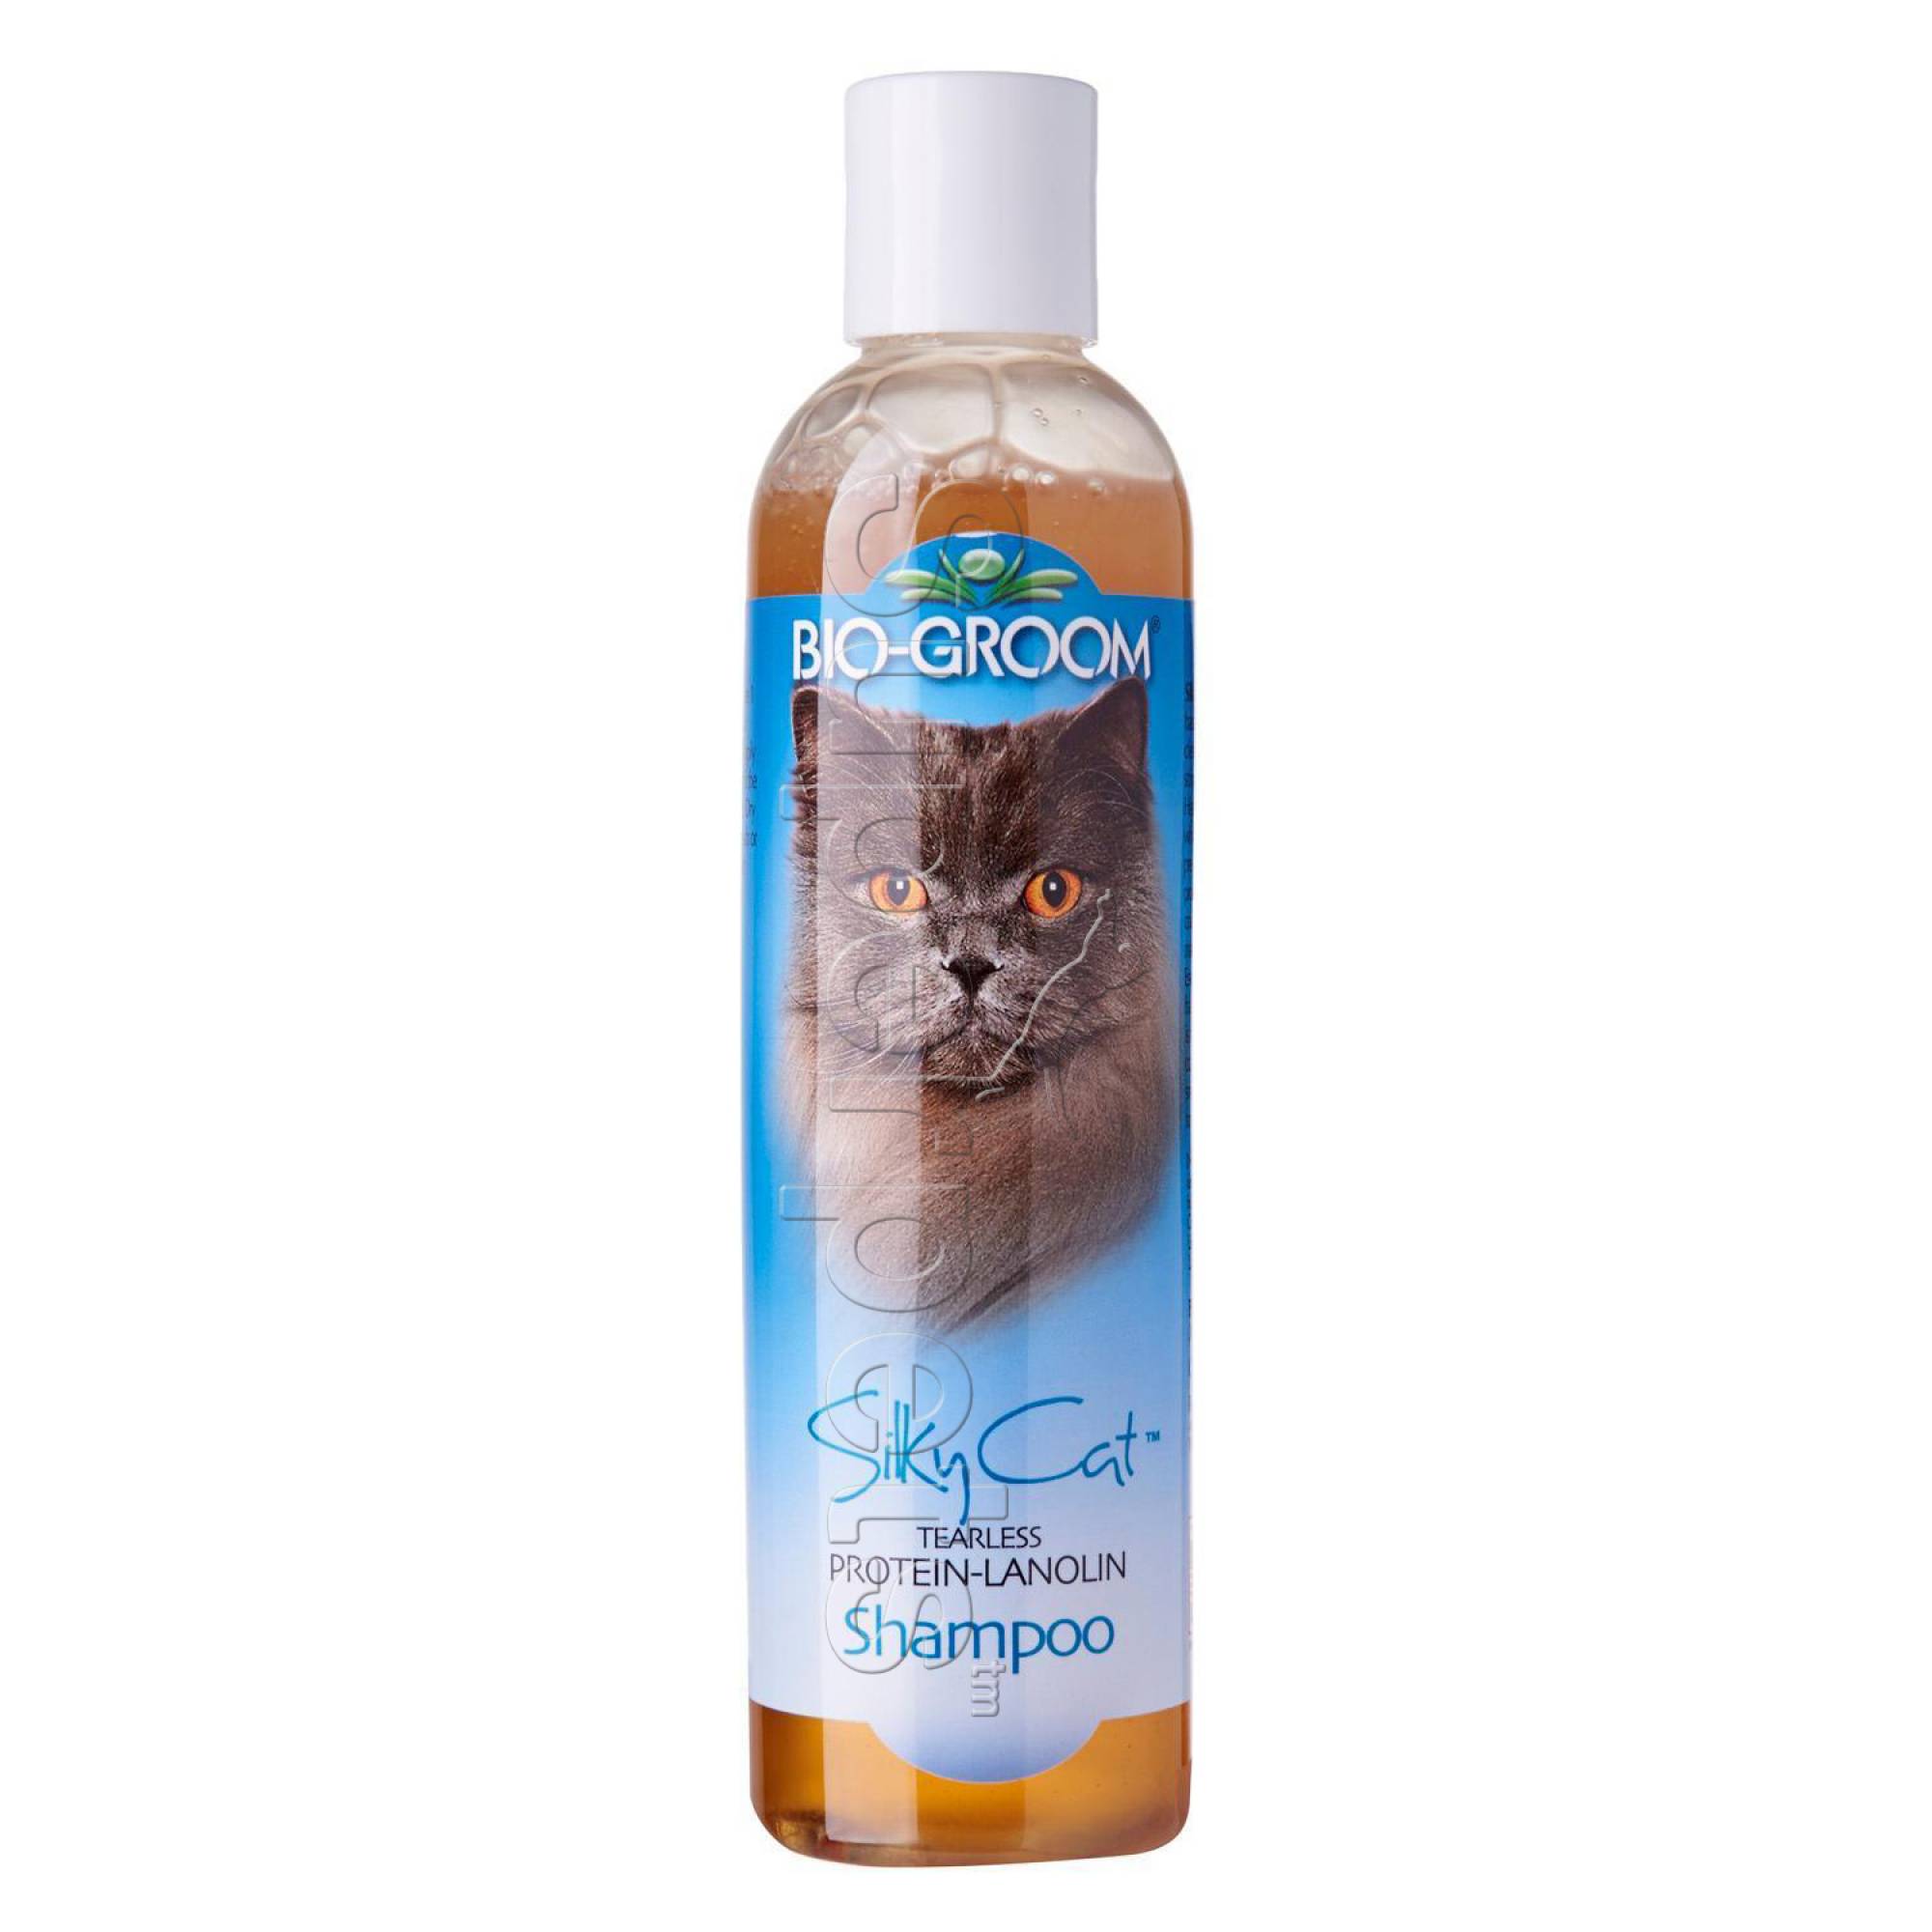 Bio-Groom Silky Cat Tearless Protein-Lanolin Shampoo 8oz (236ml)